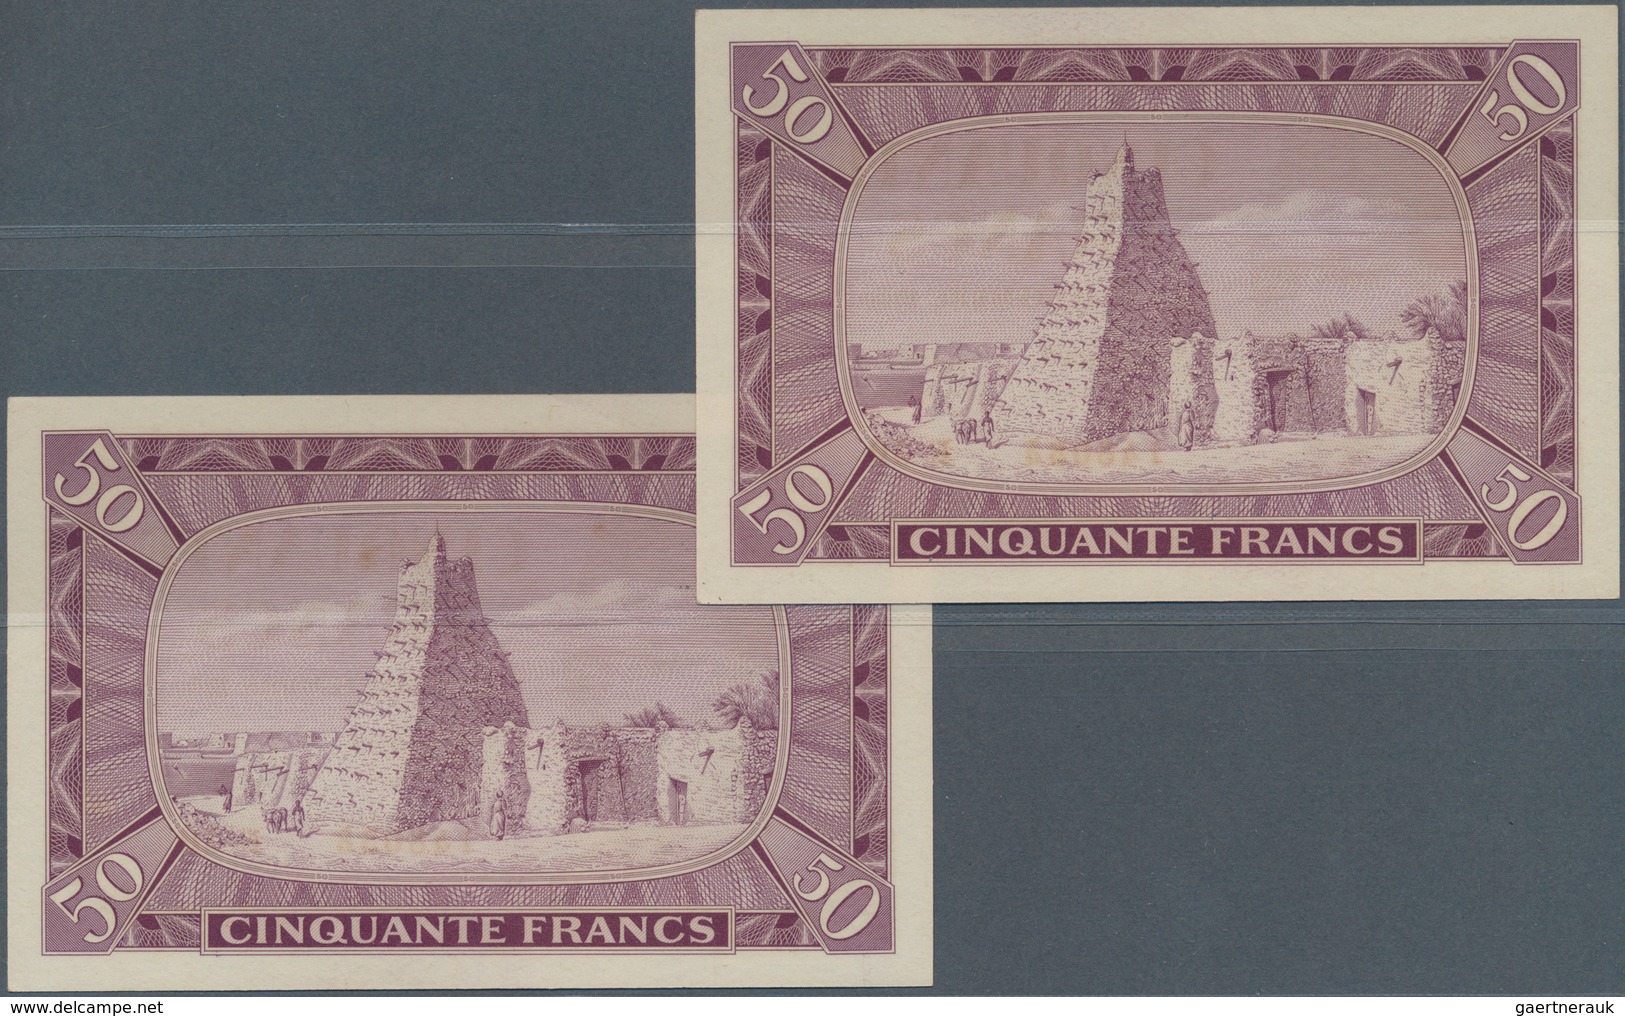 02001 Mali: 2 Pcs 50 Francs 1960 P. 1 In Condition: UNC. (2 Pcs) - Mali